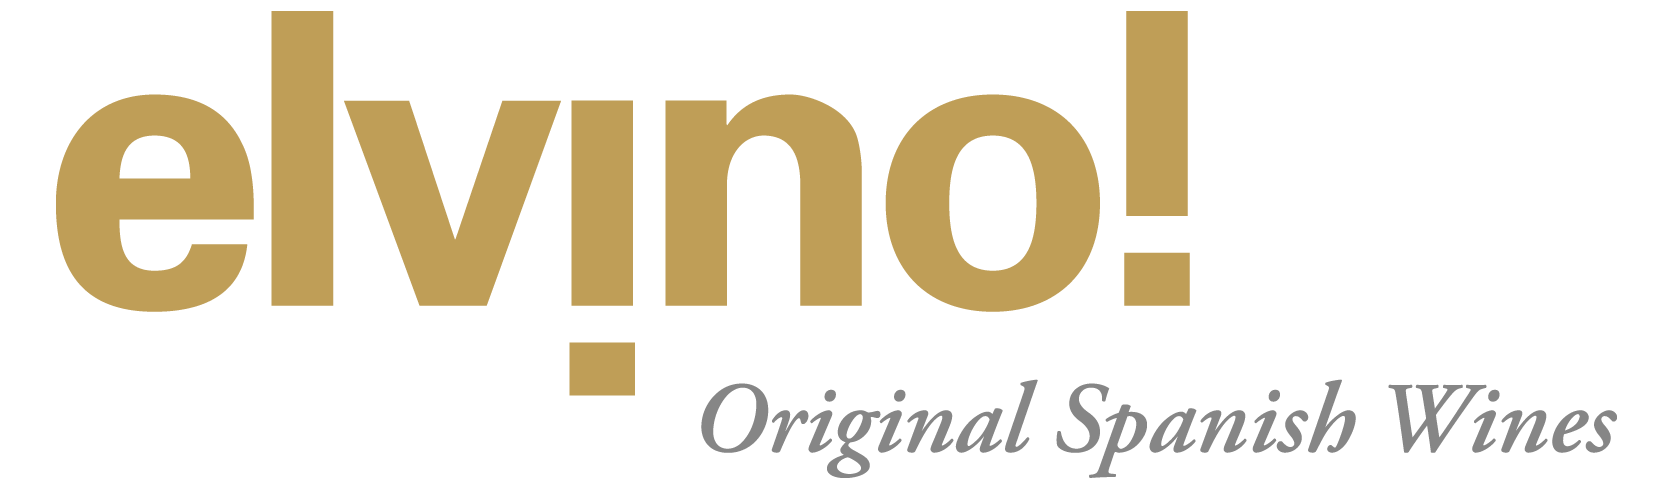 elvino logo